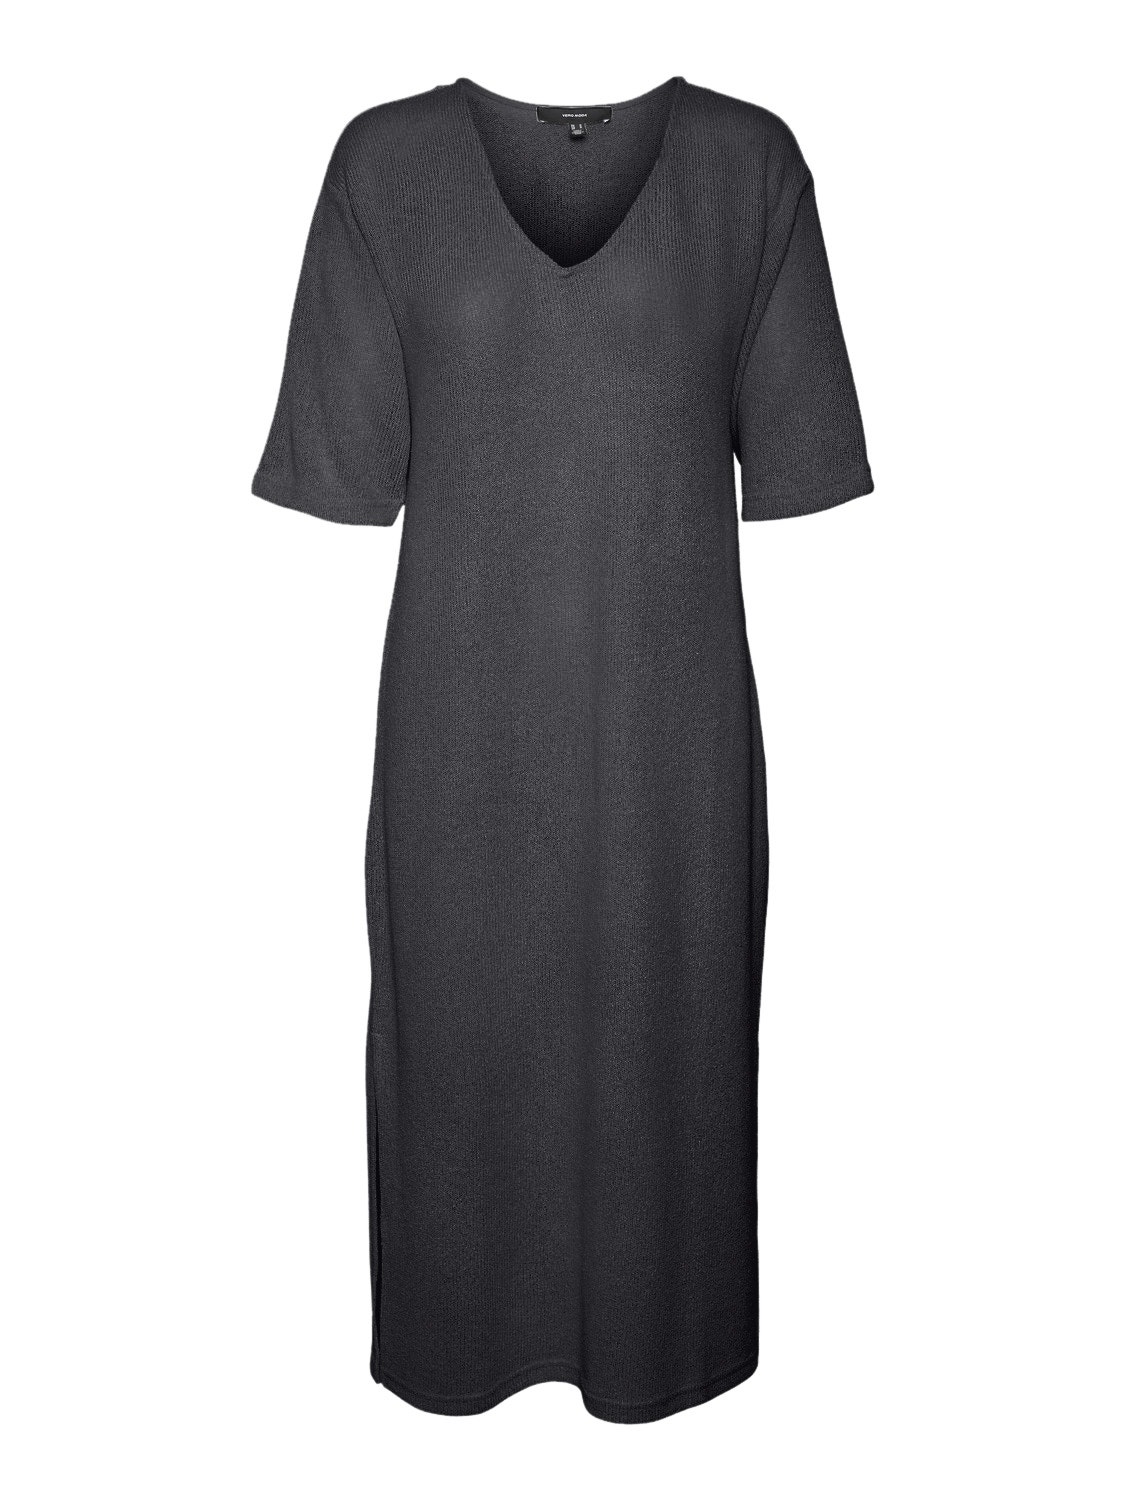 Vero Moda VMEDDIE Long dress -Grey Pinstripe - 10300284